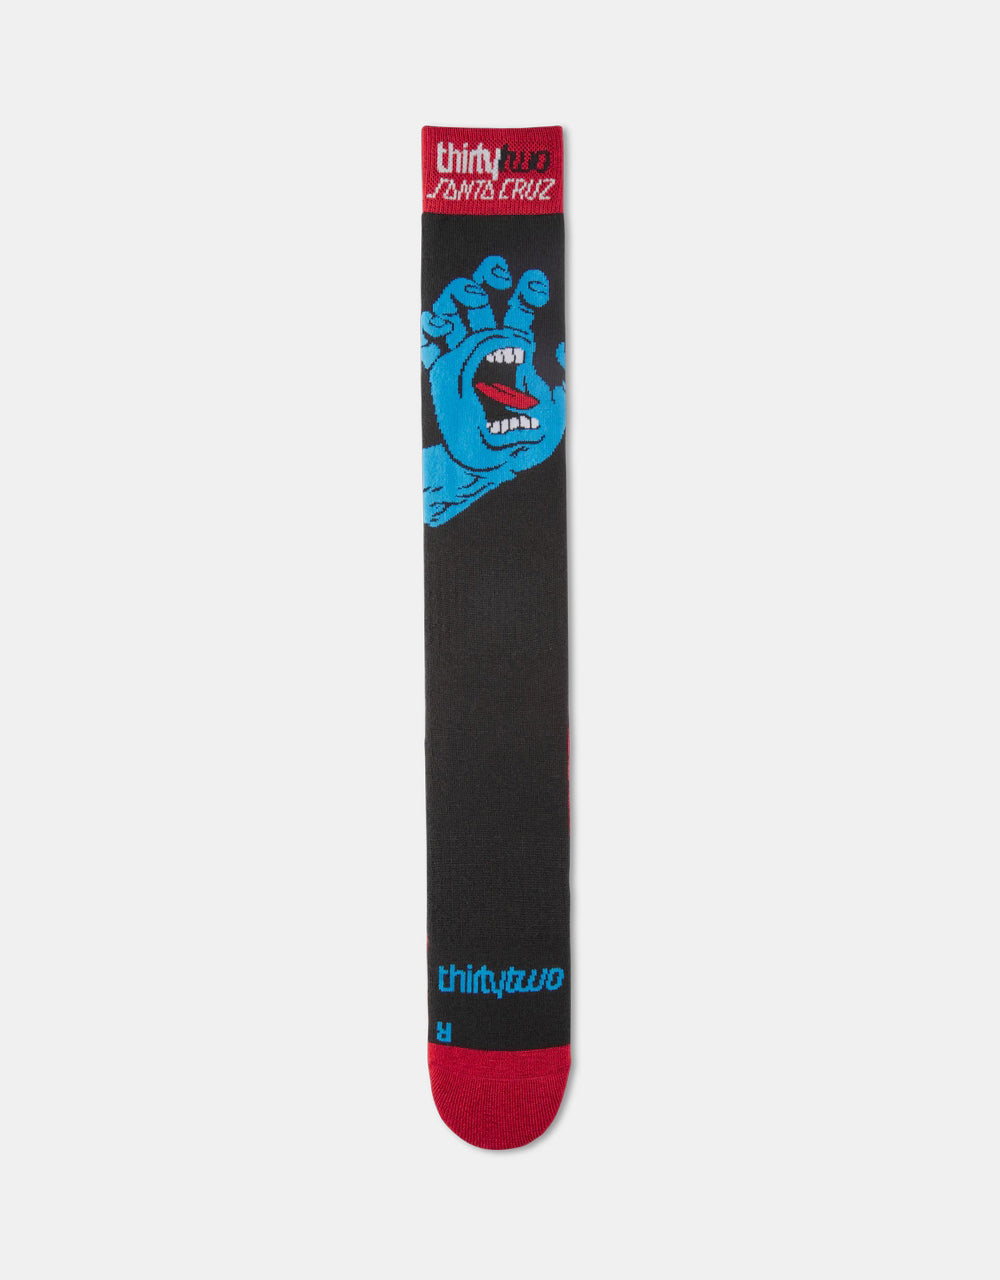 ThirtyTwo x Santa Cruz Snowboard Socks - Black